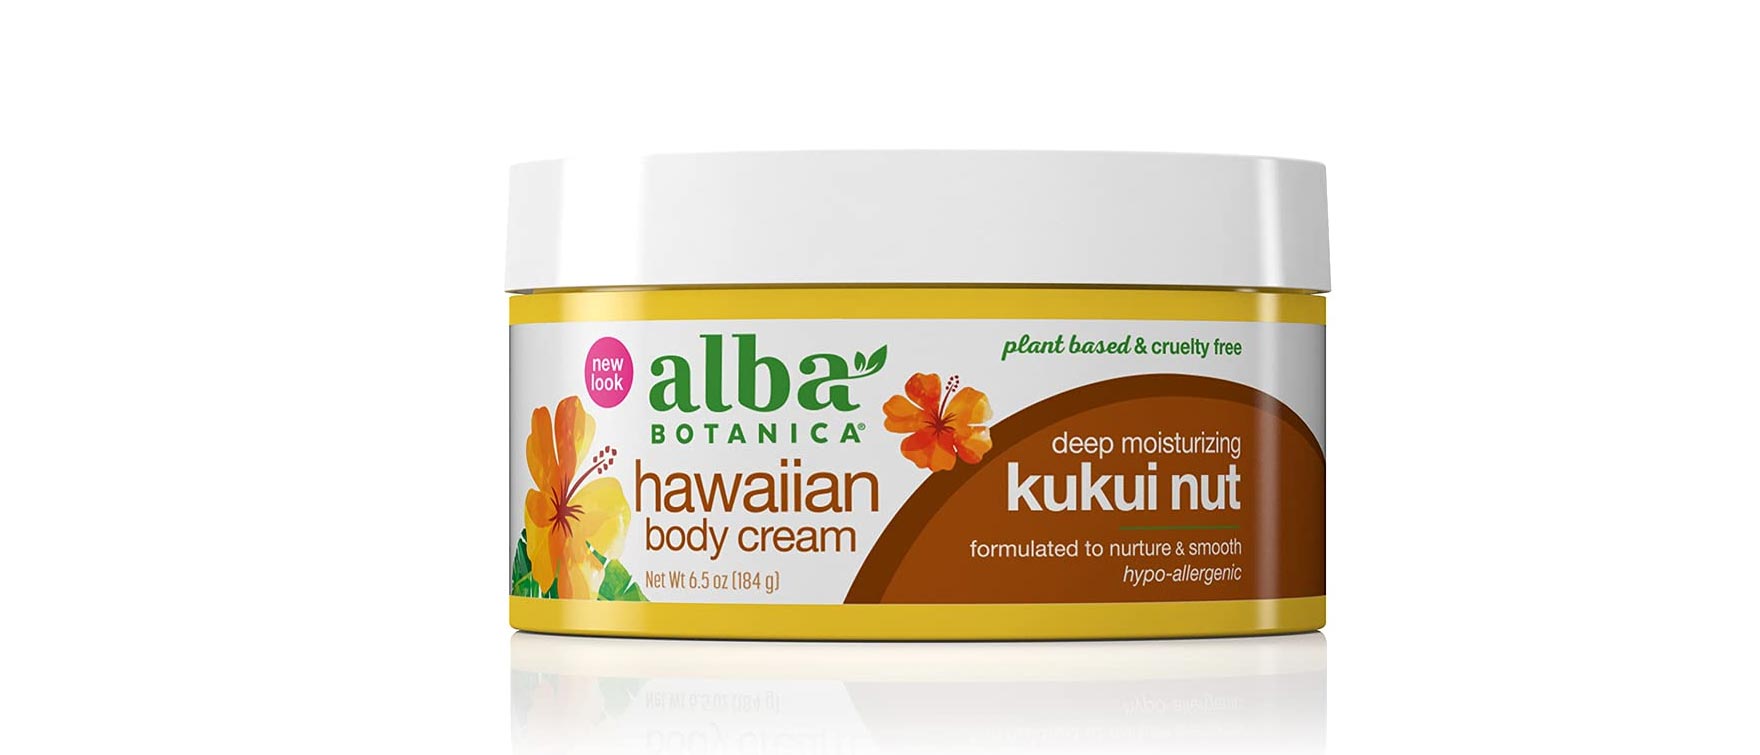 7. Best Organic: Alba Botanica Hawaiian Body Cream, Deep Moisturizing Kukui Nut